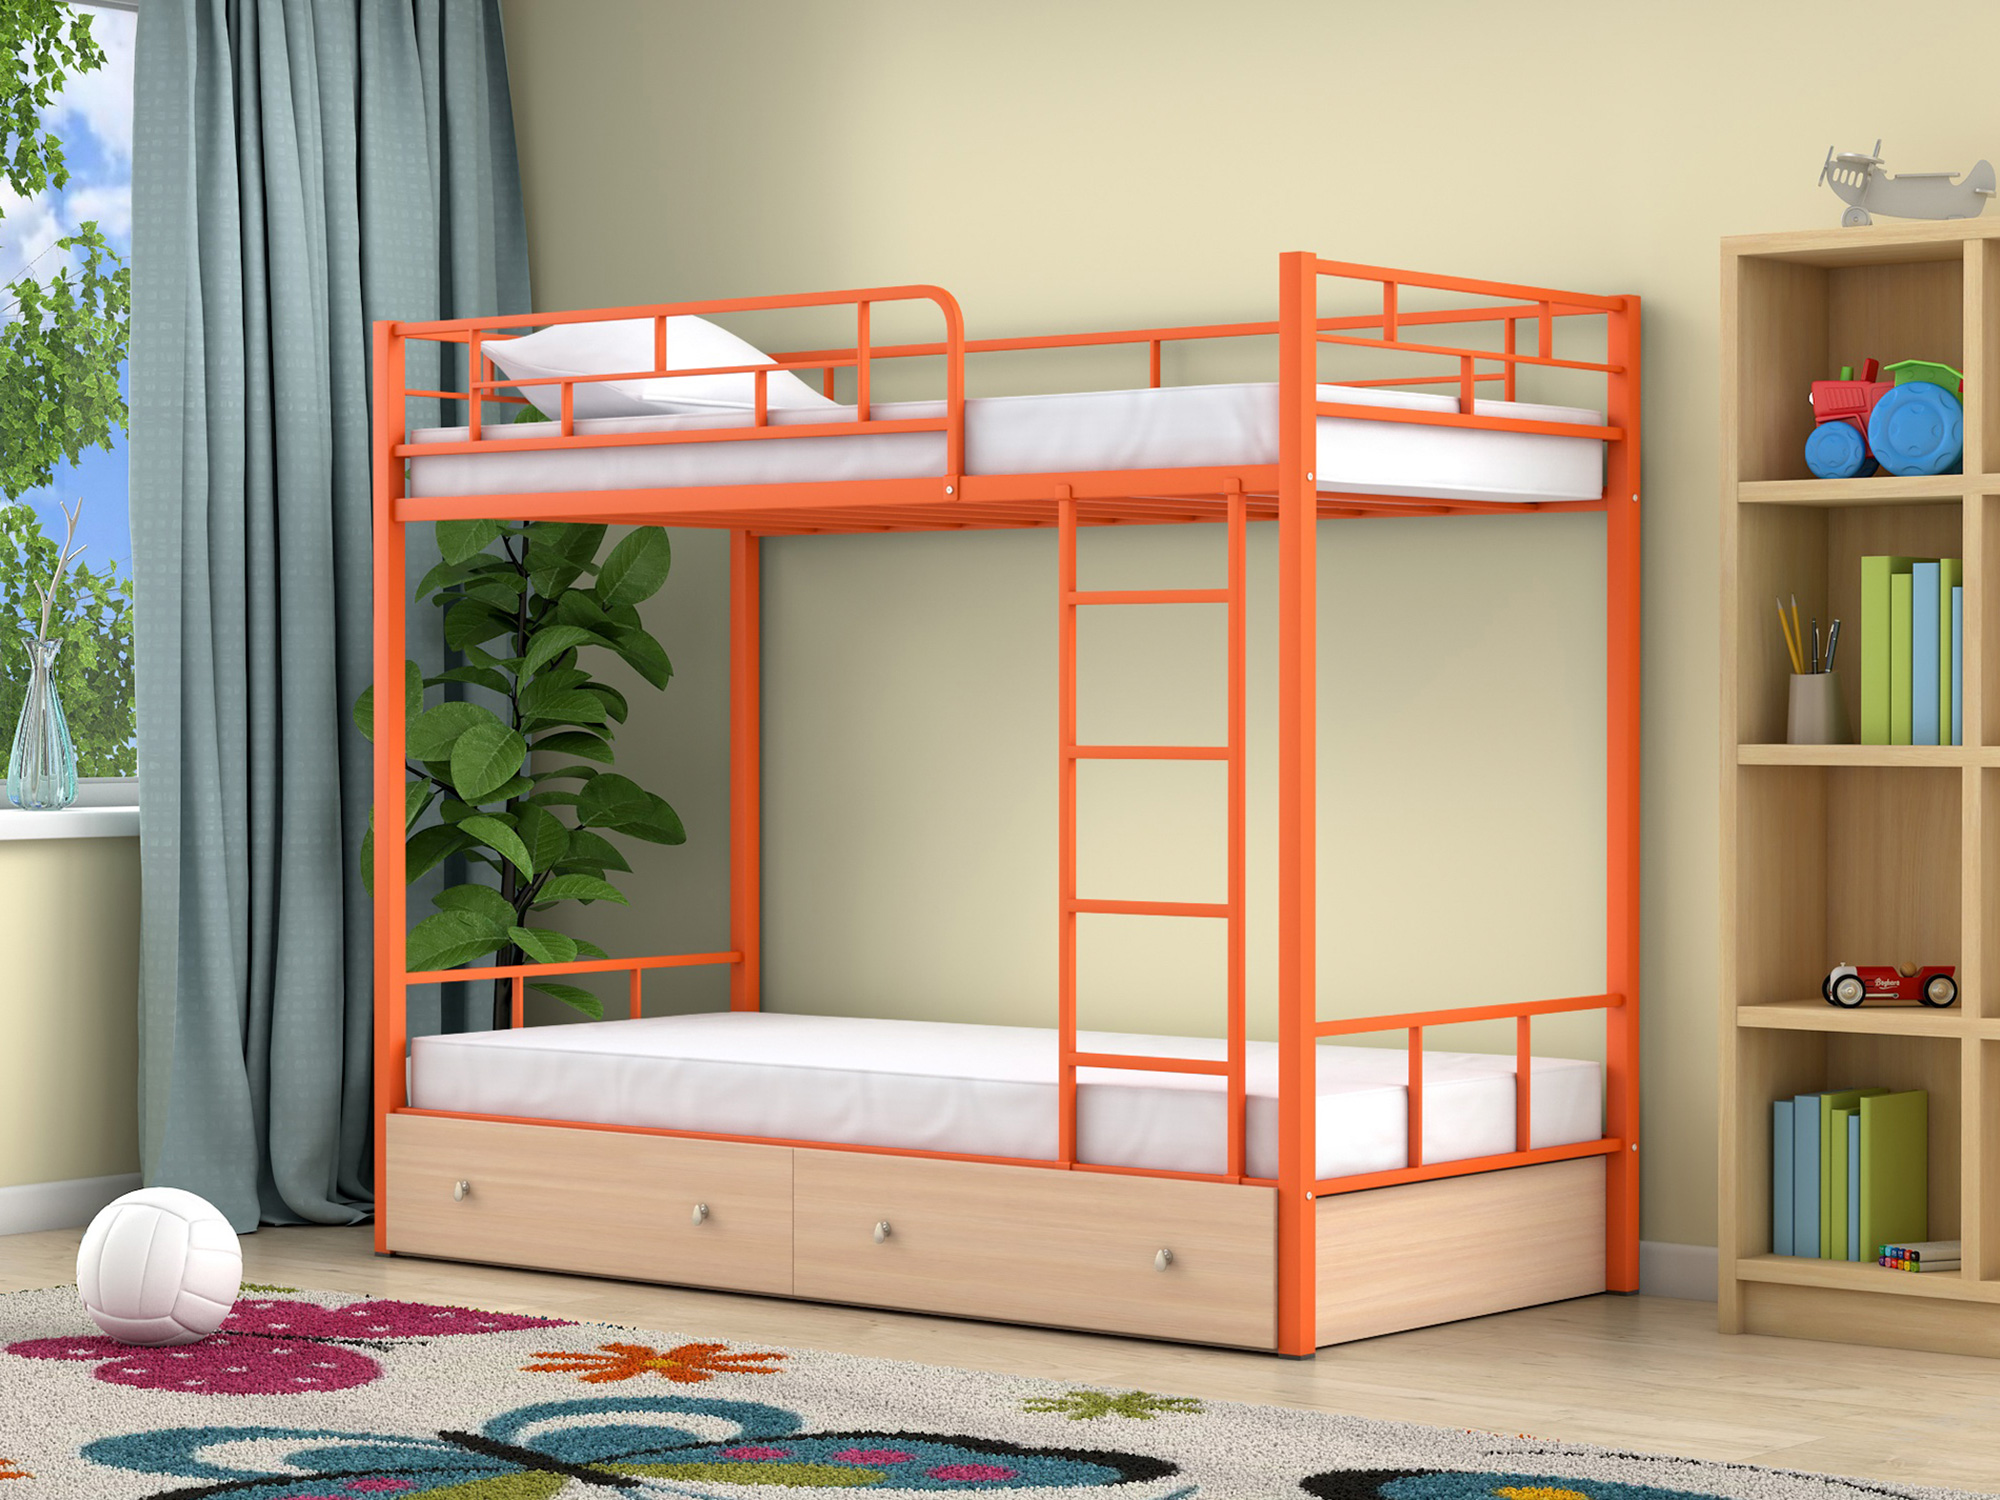 Двухъярусная кровать Ницца (90х190) Дуб молочный, , Бежевый, Оранжевый, ЛДСП, Металл двухъярусная кровать ницца 90х190 дуб молочный бежевый оранжевый лдсп металл